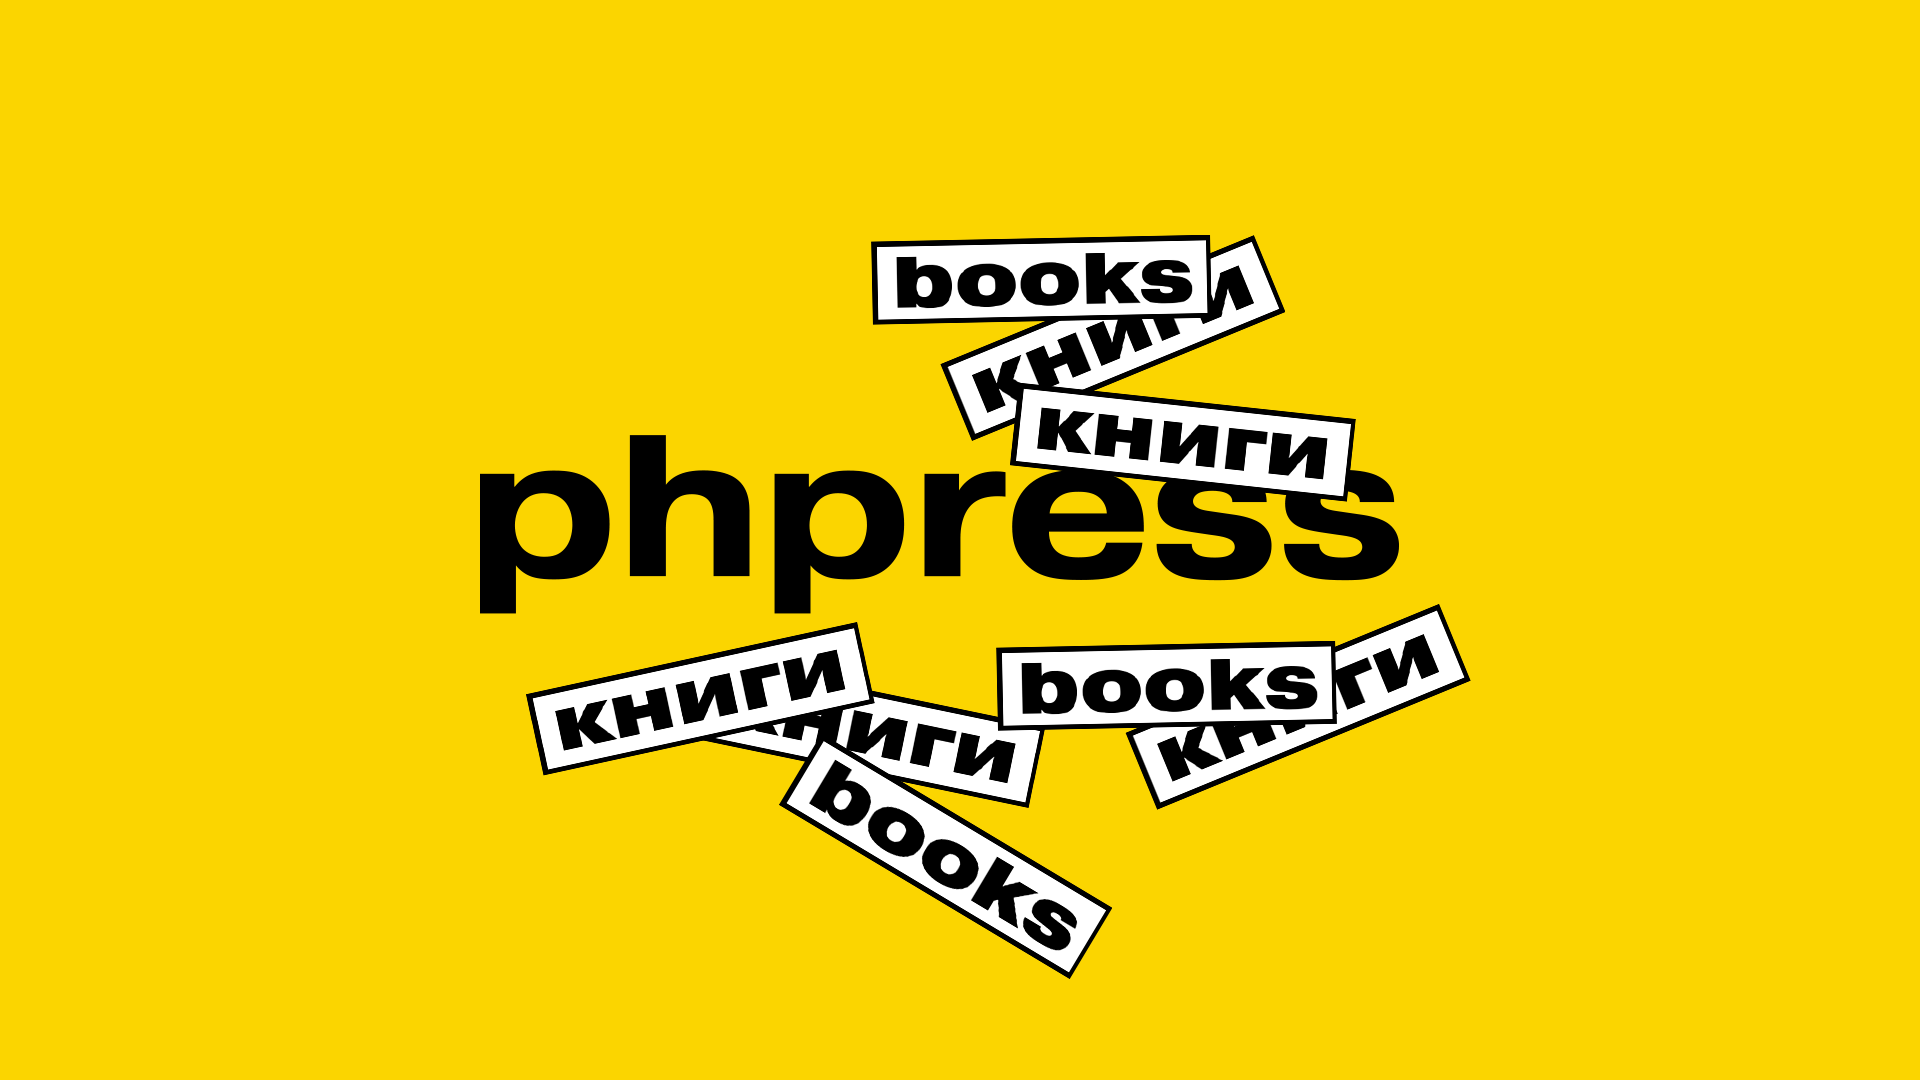 Реклама печати книг типографии phpress